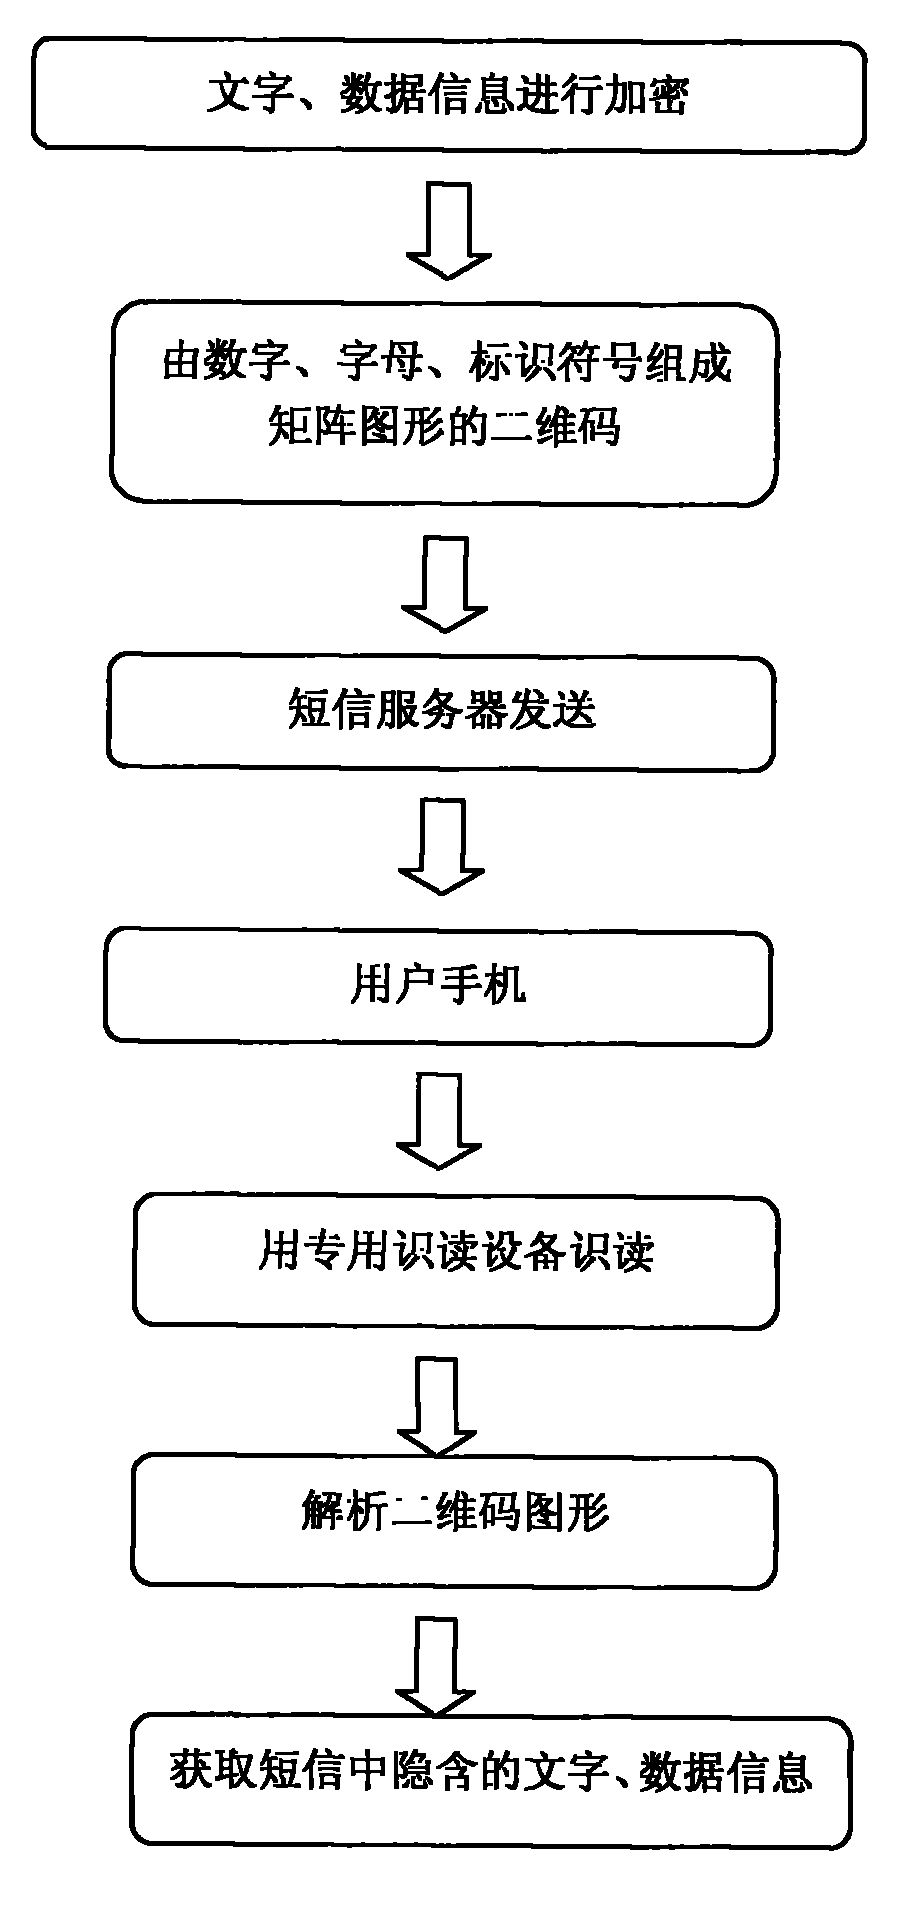 Short message transmission mode based on two-dimension code